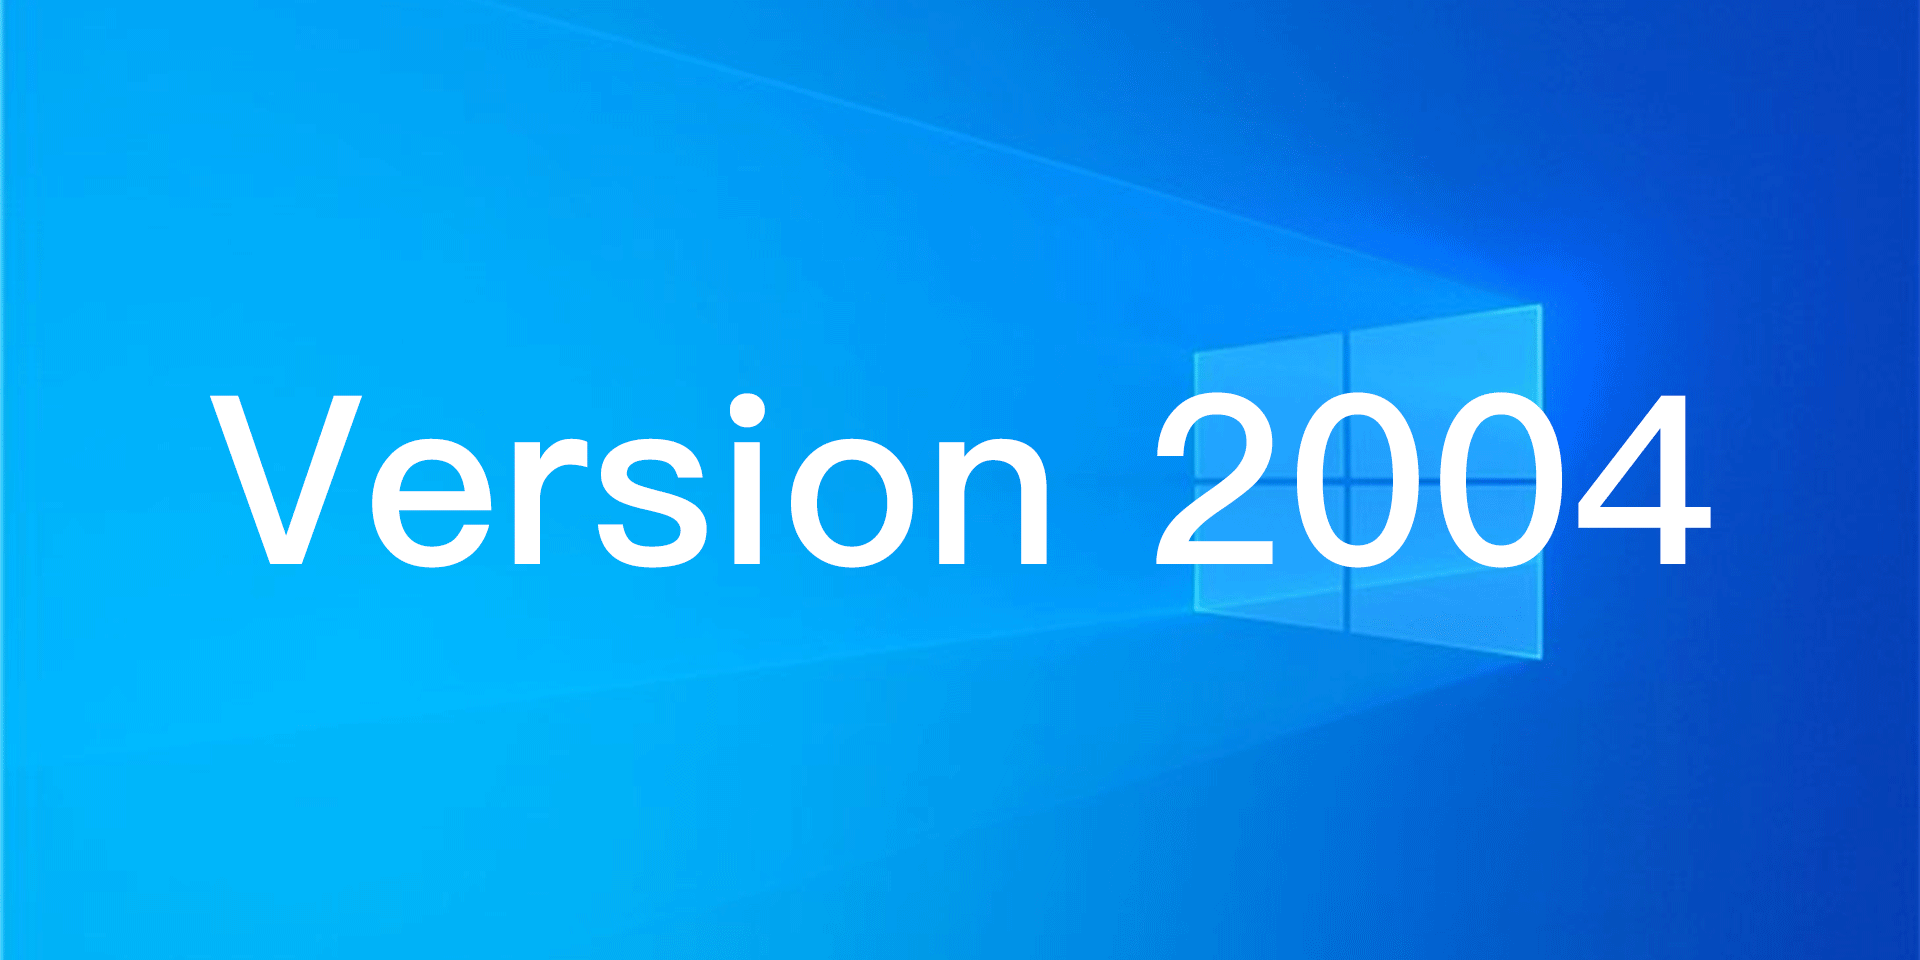 Windows 10 v2004(20H1)正式版新功能全面介绍(附原版ISO镜像下载)